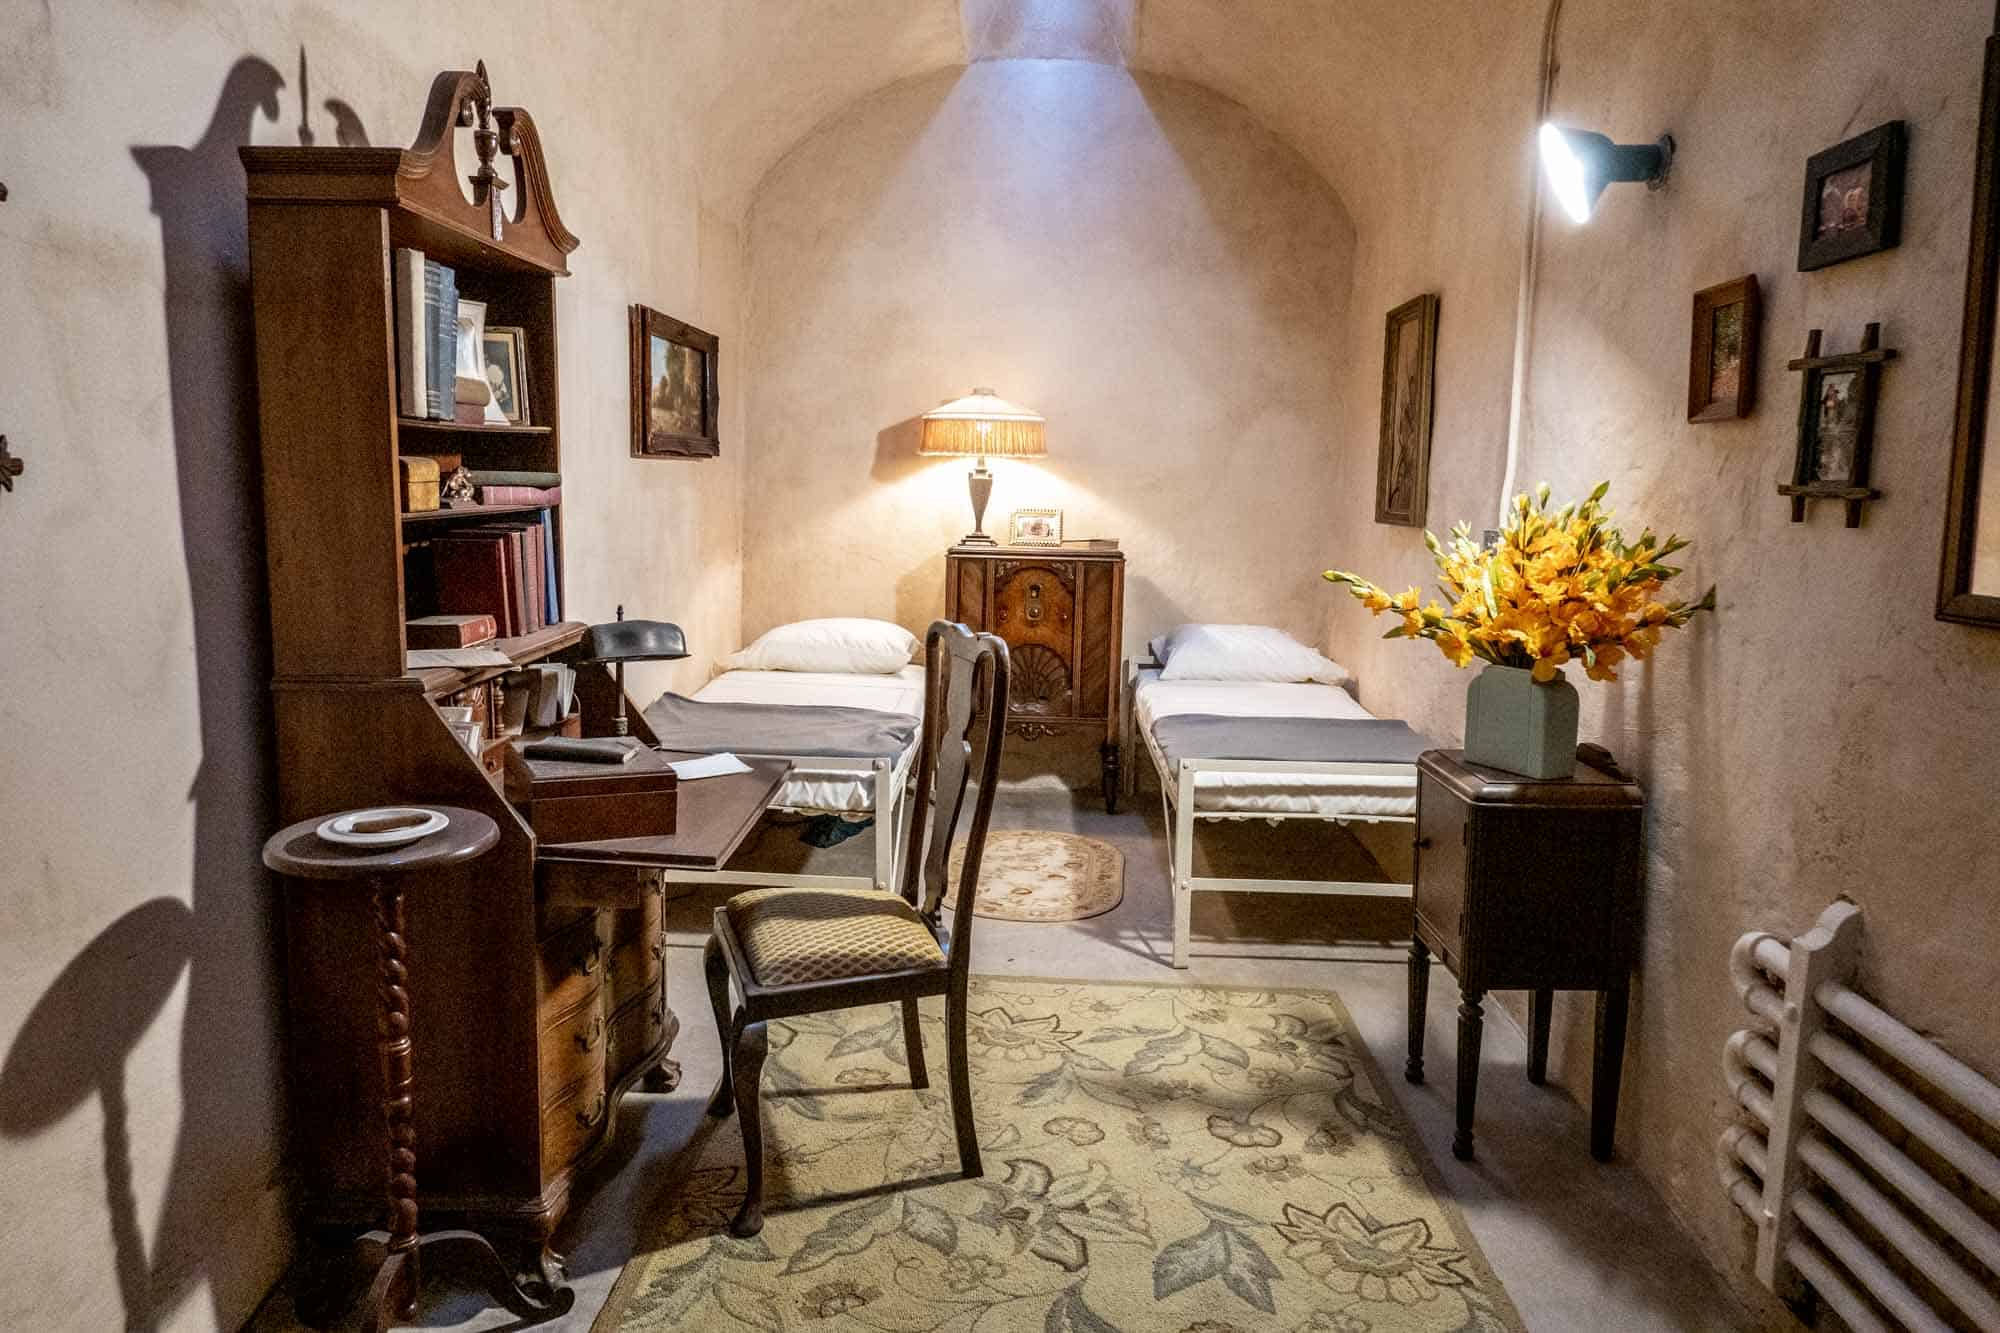 Furniture in fancy prison cell of Al Capone